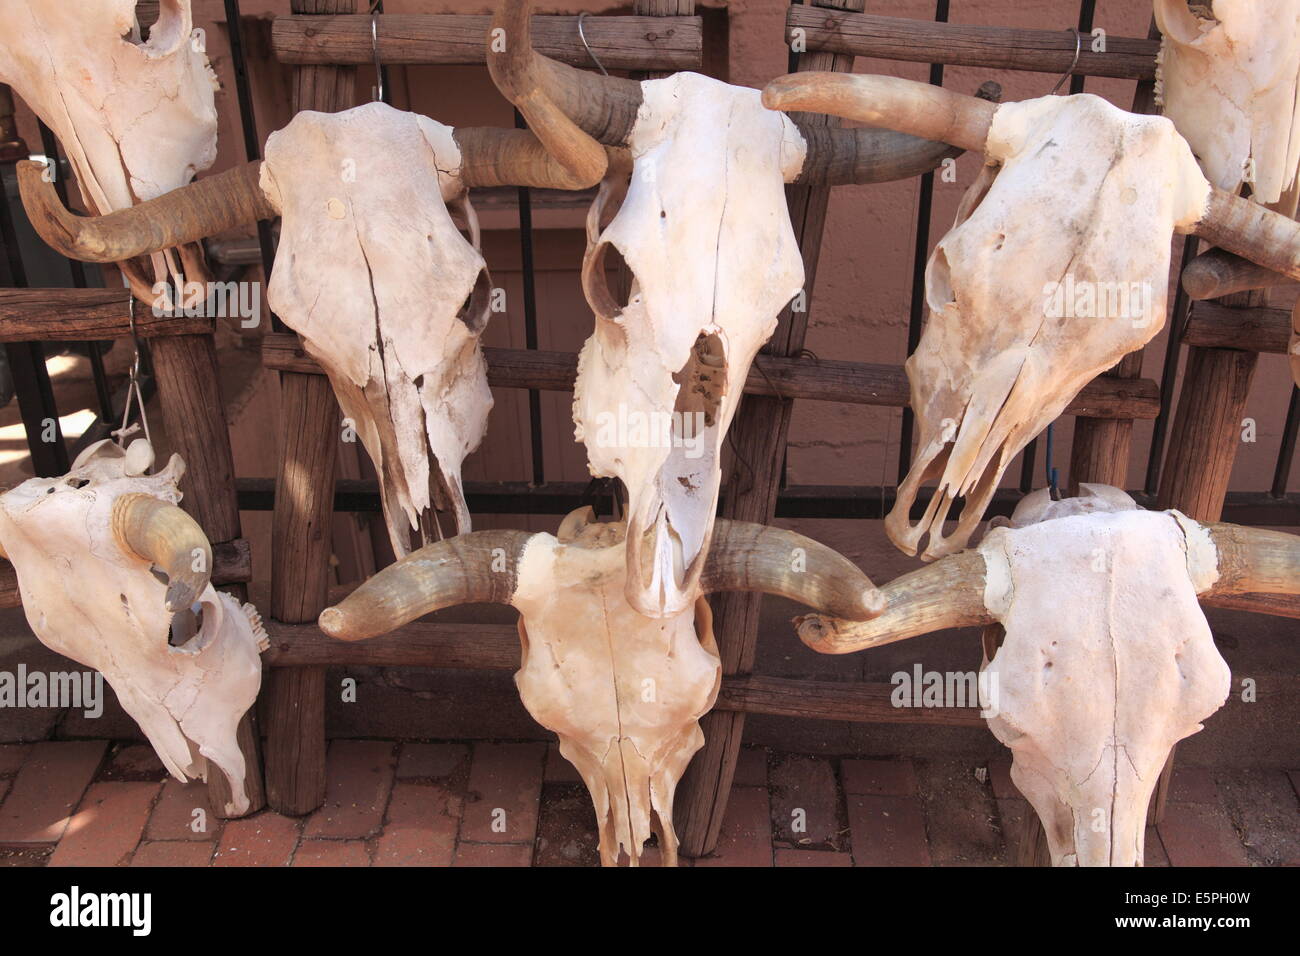 Steer skulls for sale, Santa Fe, New Mexico, United States of America, North America Stock Photo